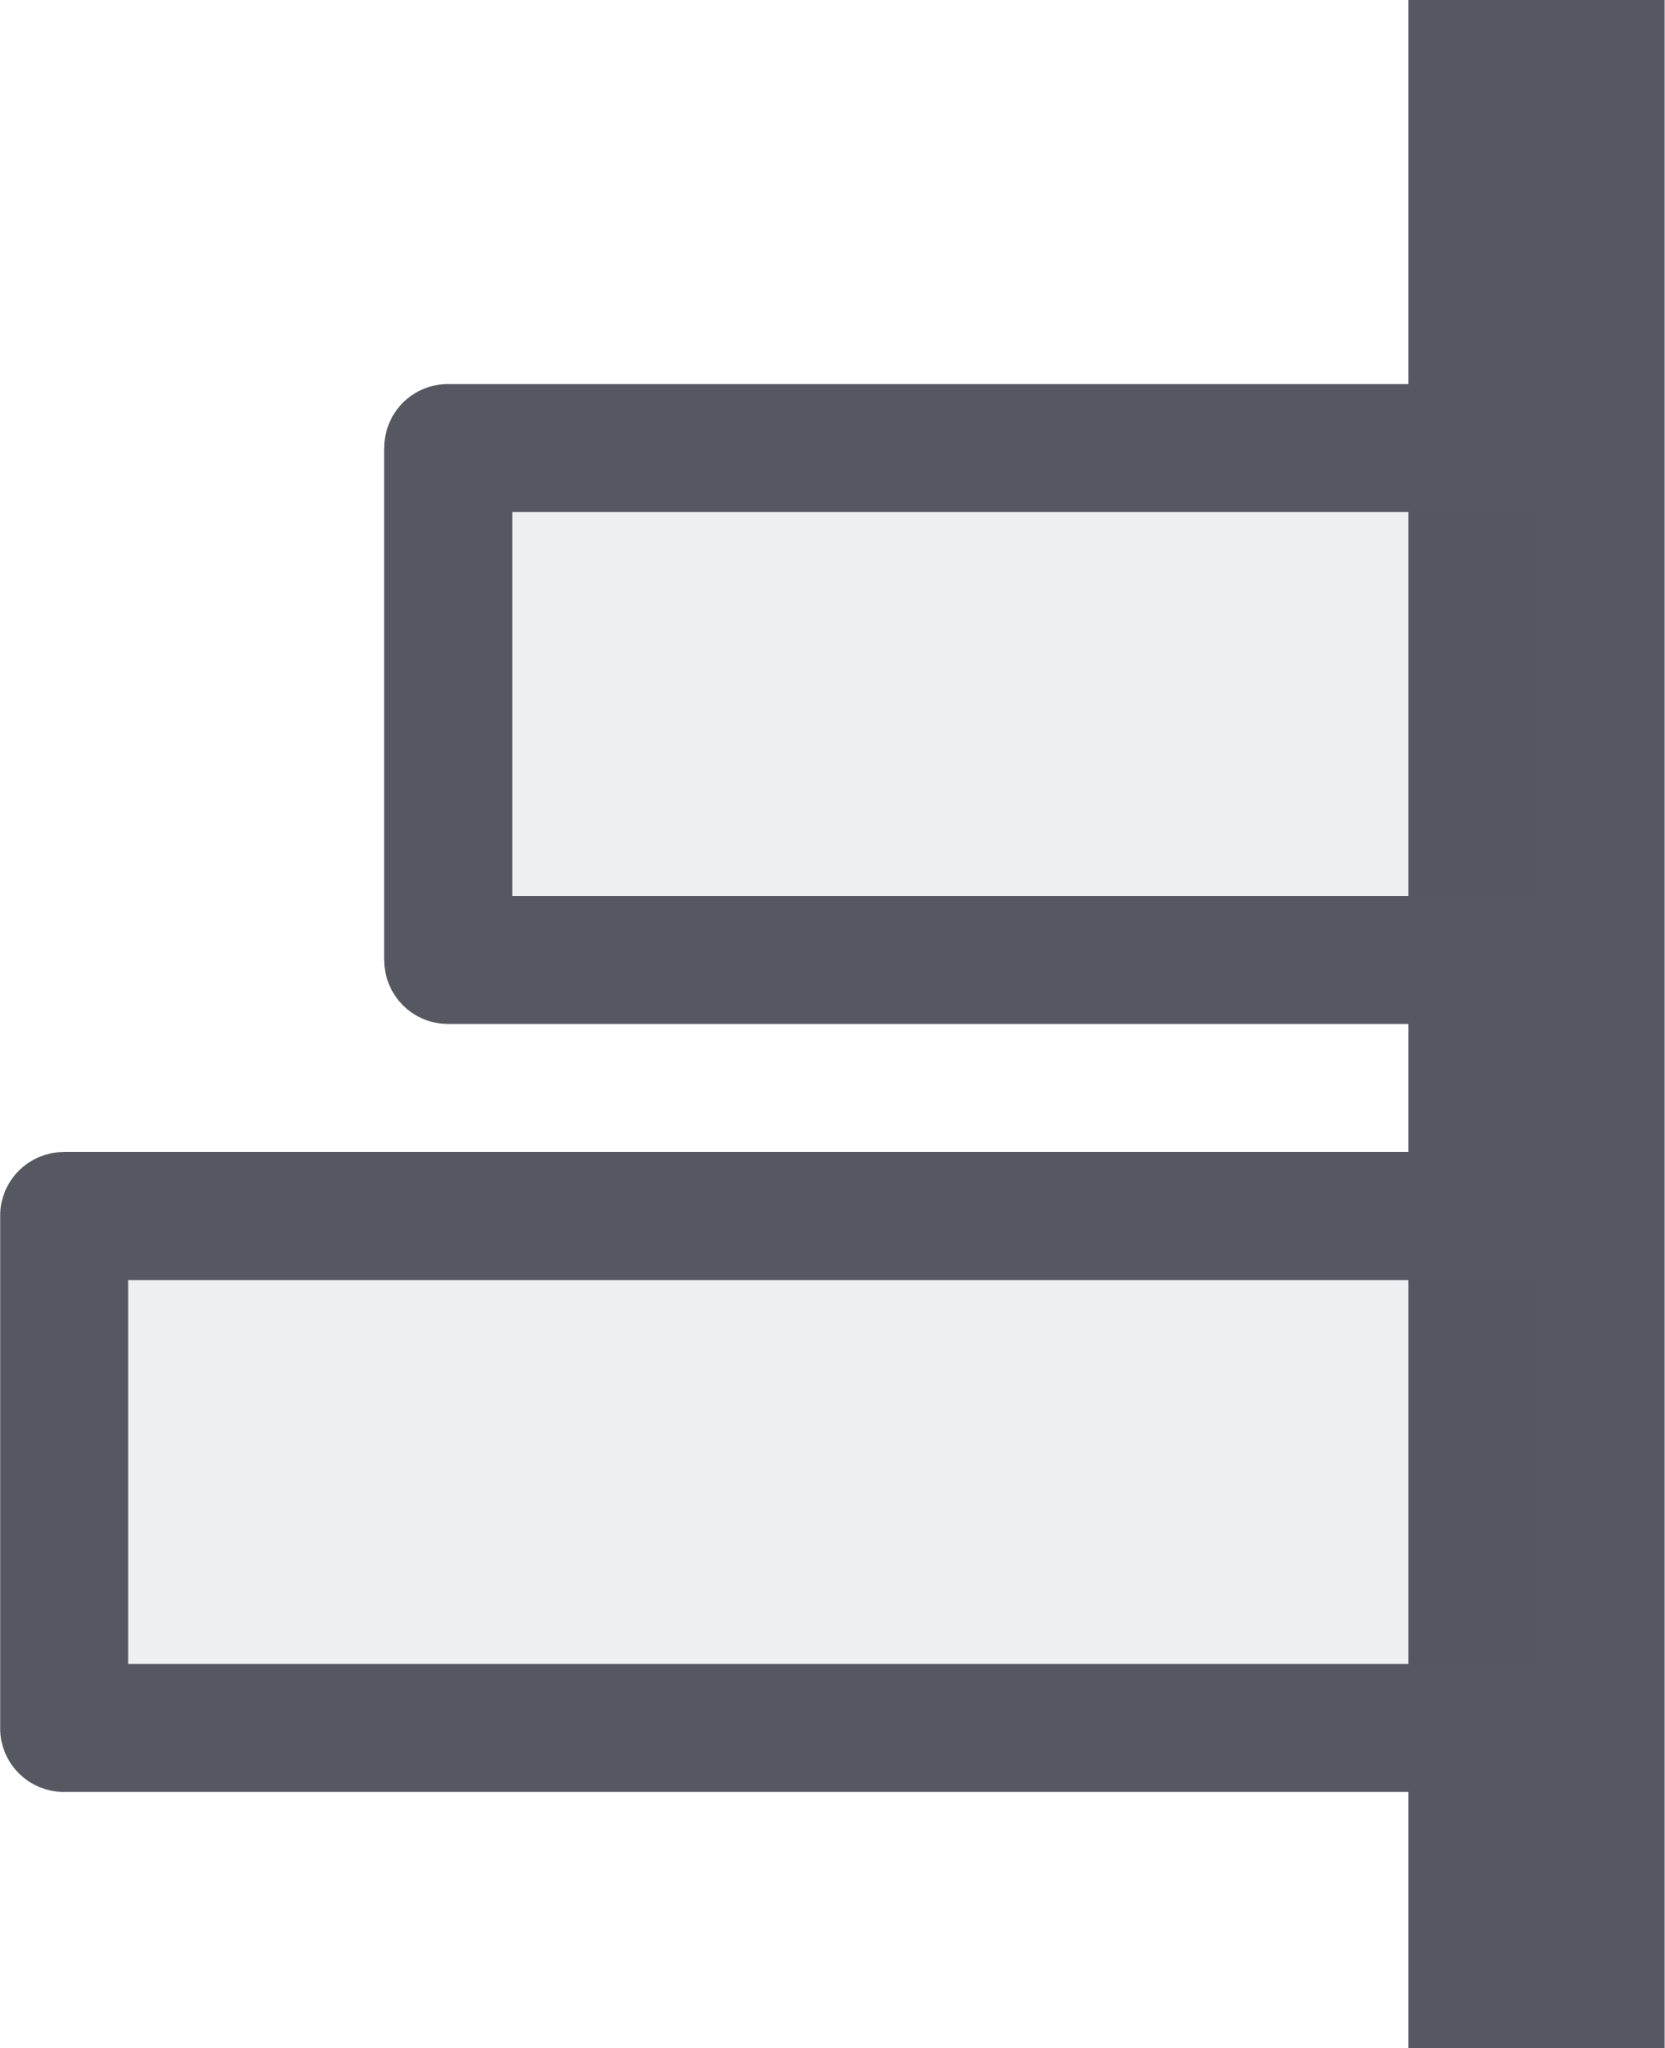 align horizontal right symbolic icon